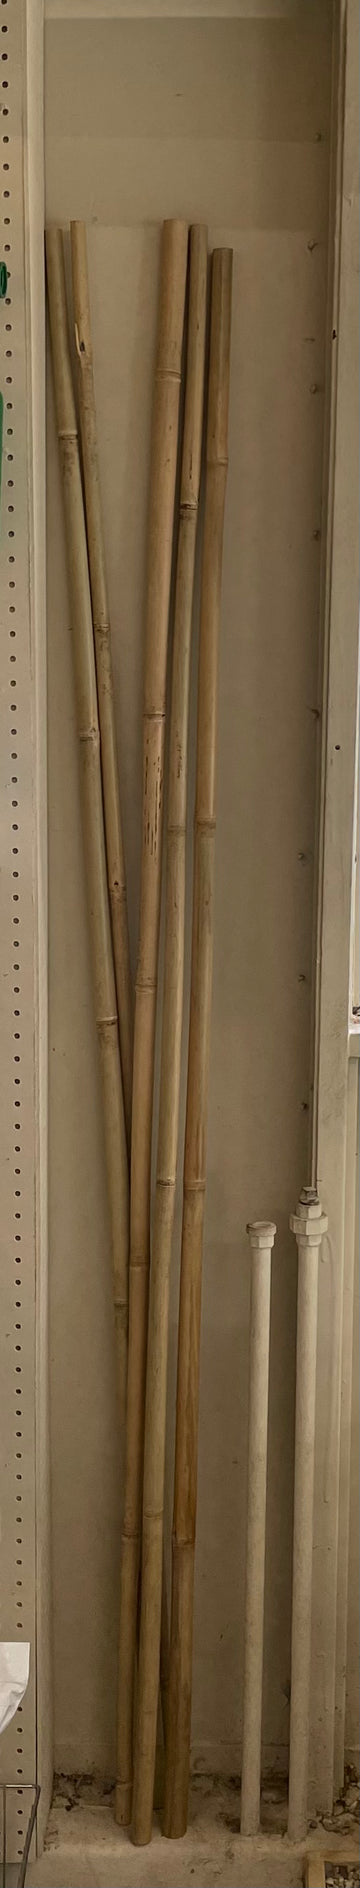 Bamboo Pole 6' X 1"